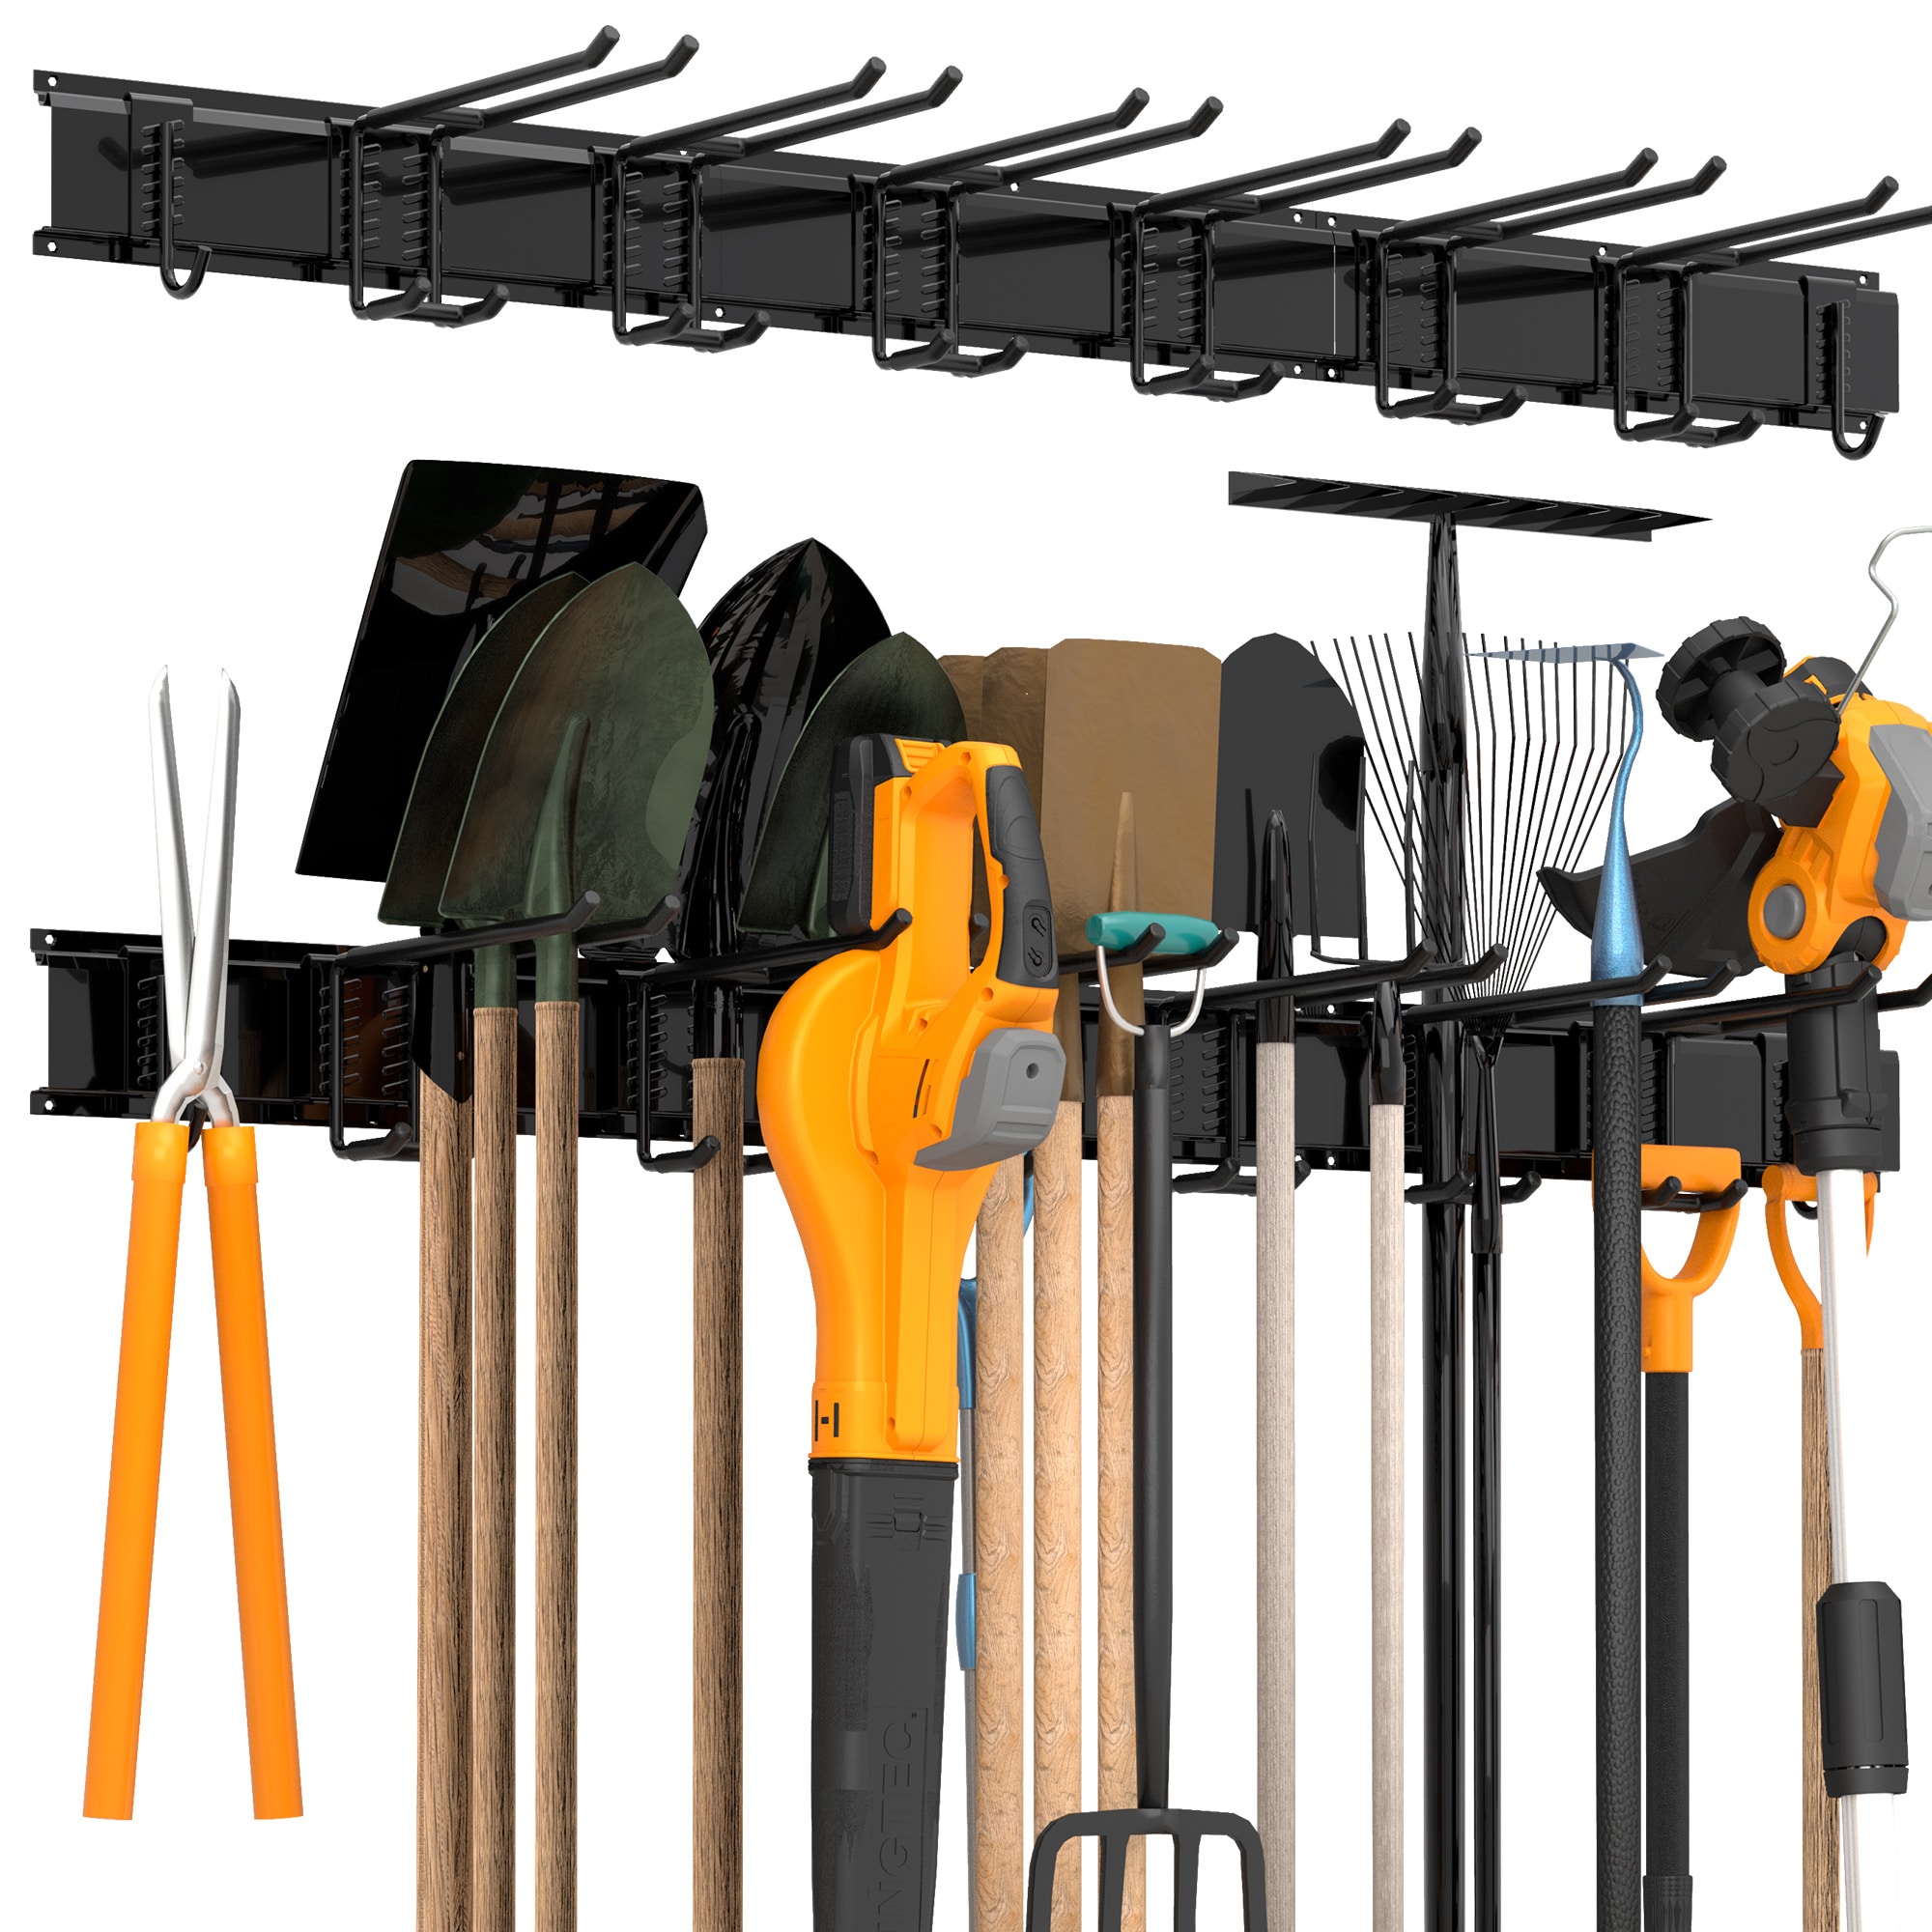 Sttoraboks Multi-tool Hanger 51-in Black Steel in the Garage